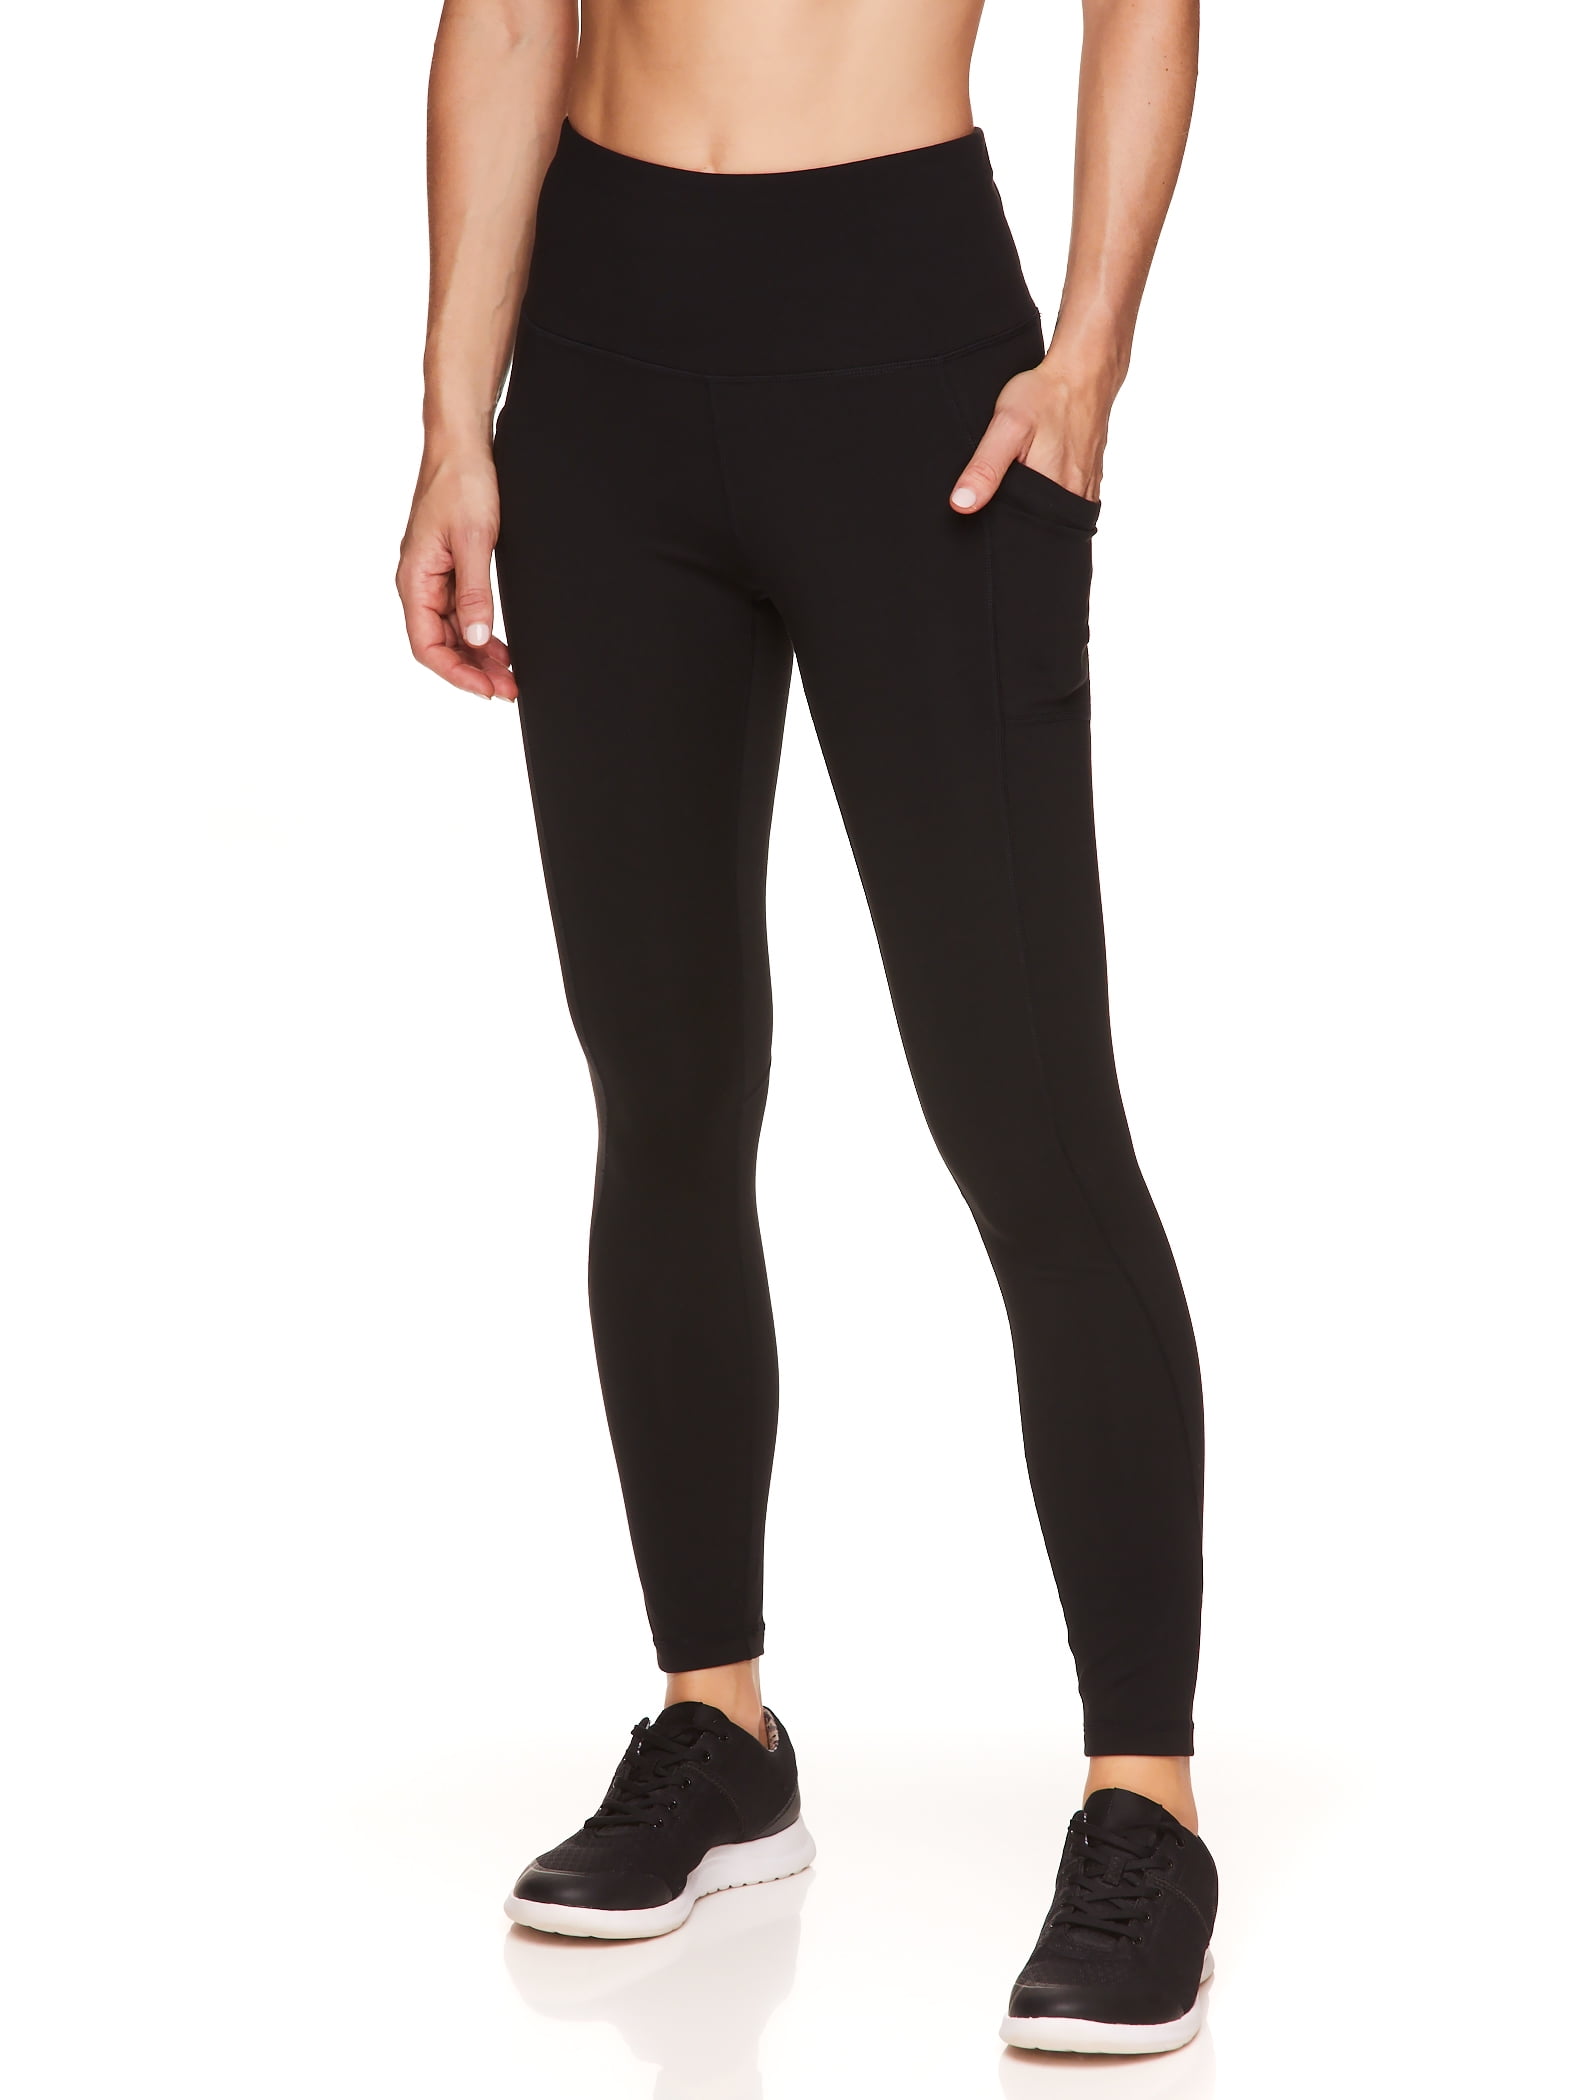 Yogalicious - Women's High Waist Side Pocket 7/8 Ankle Legging - White - X  Large : Target